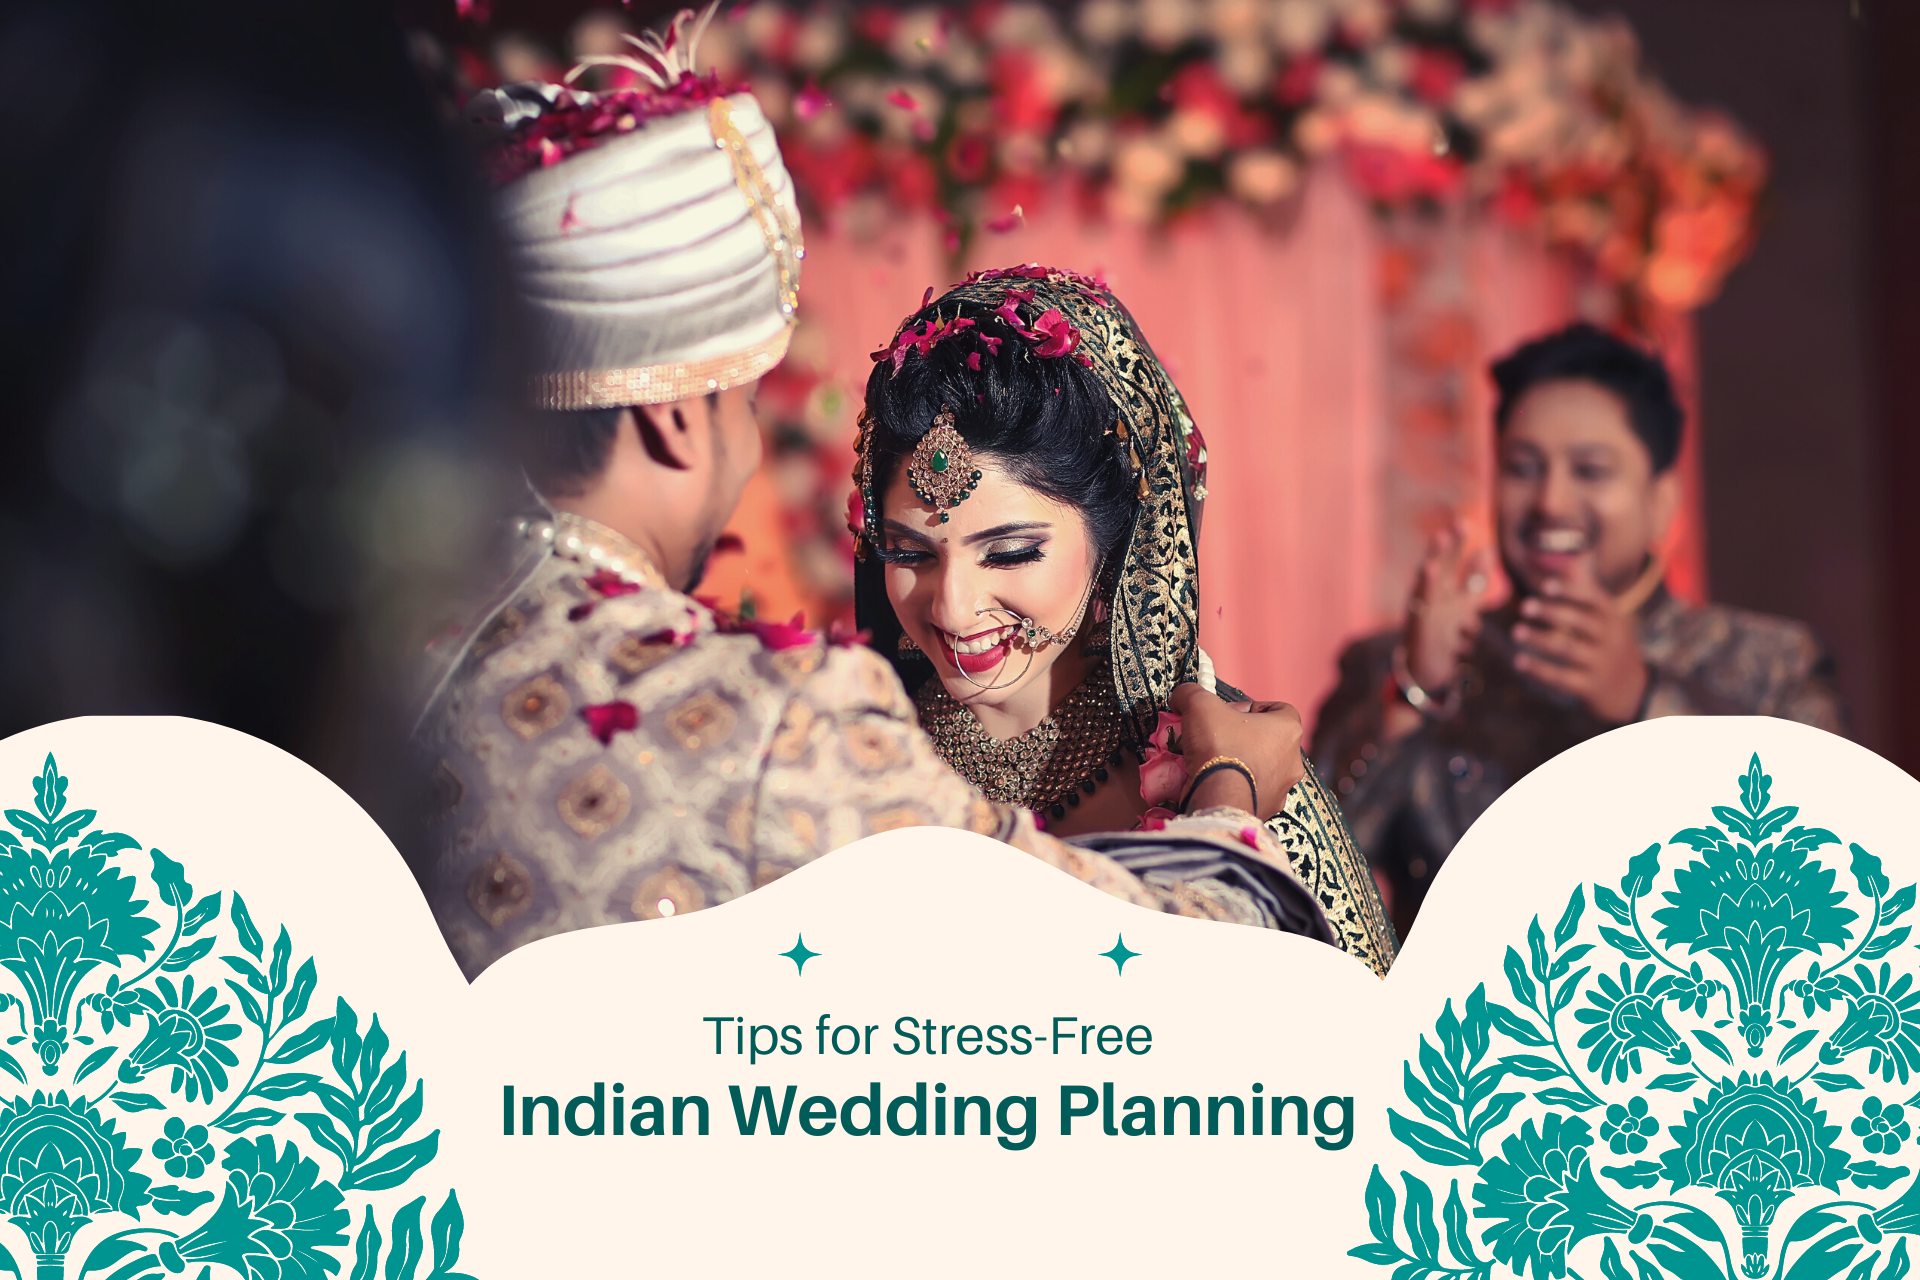 Indian Wedding Planning